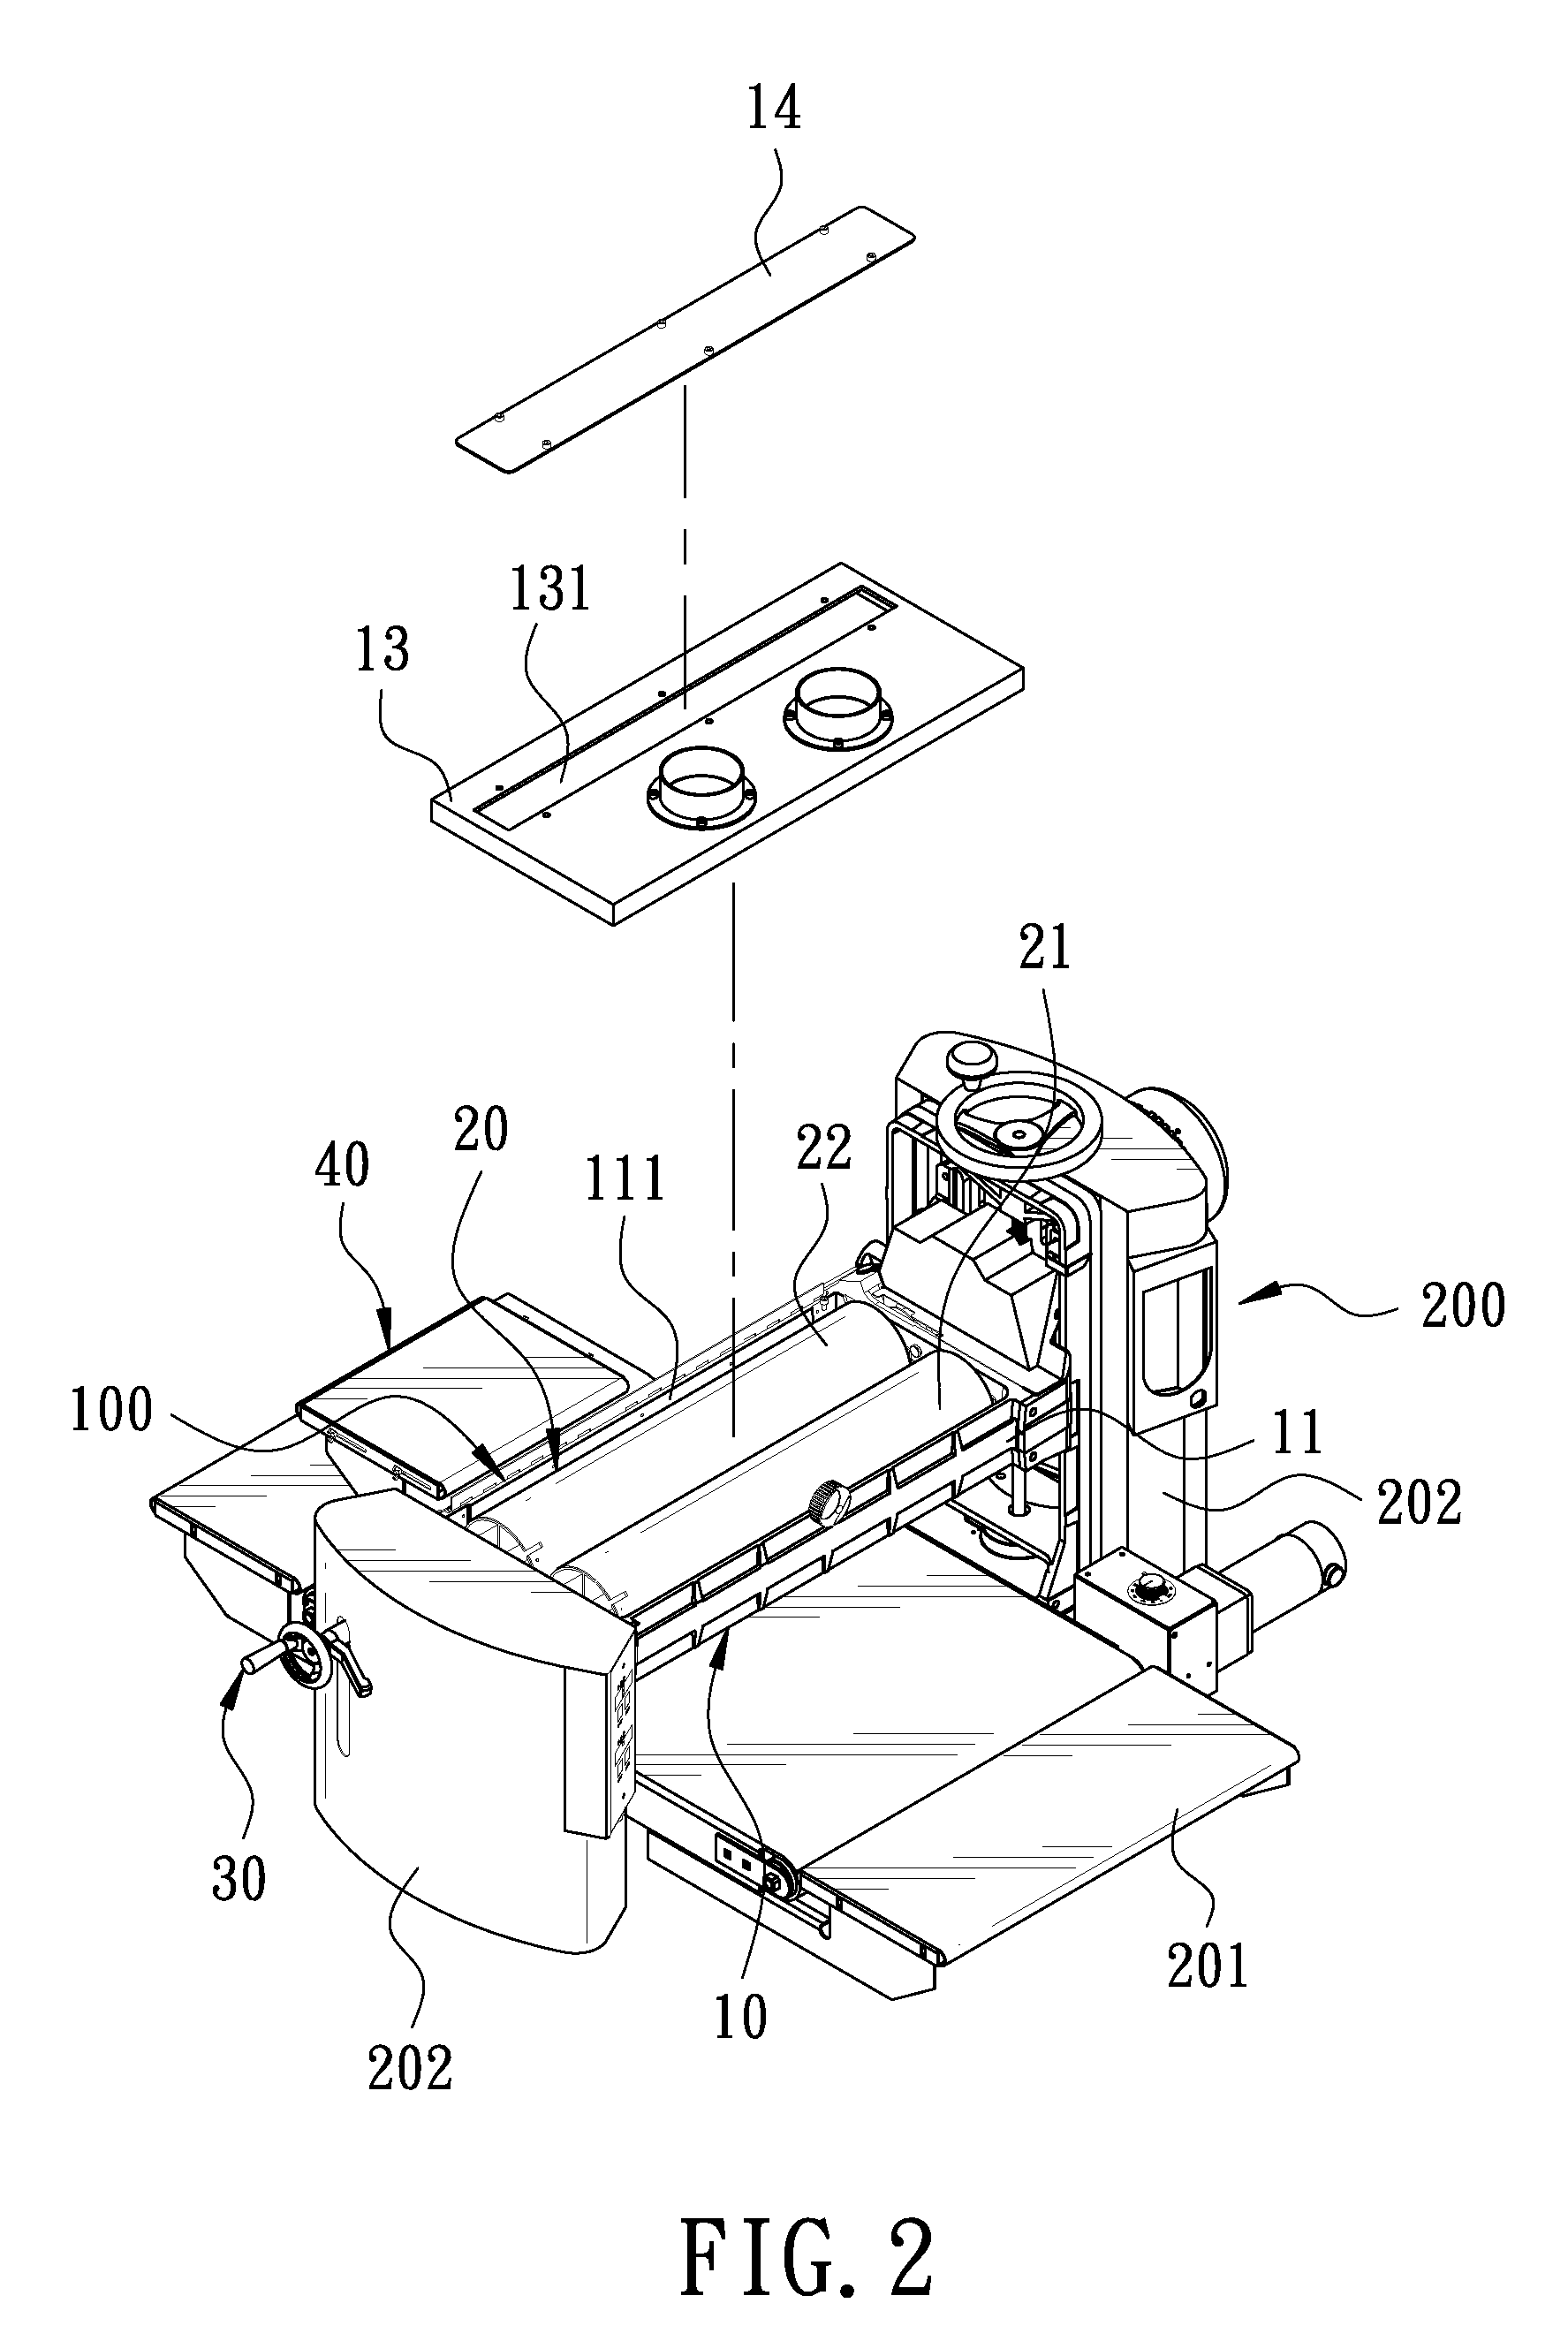 Abrasive apparatus of a sander